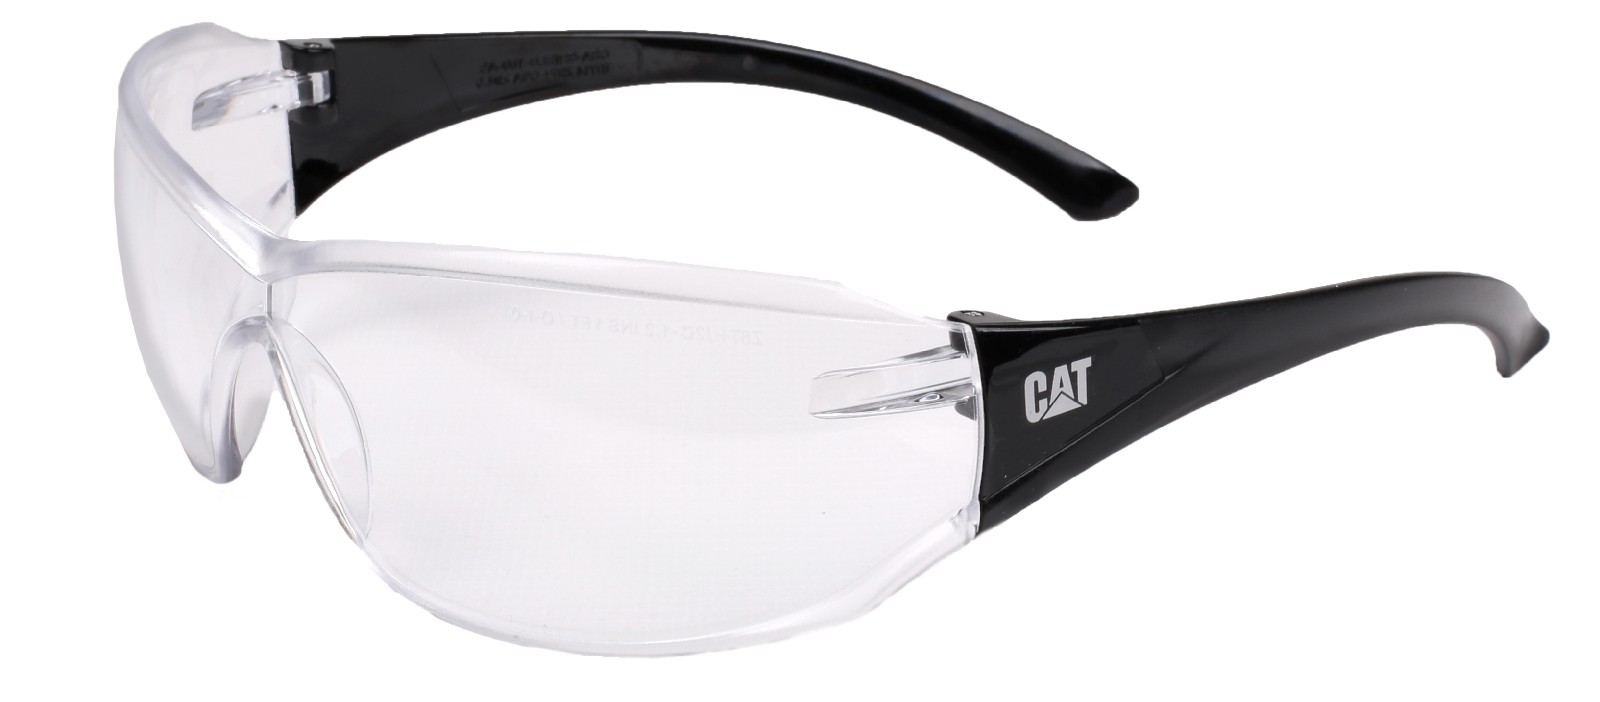 Caterpillar Shield Safety Glasses-0